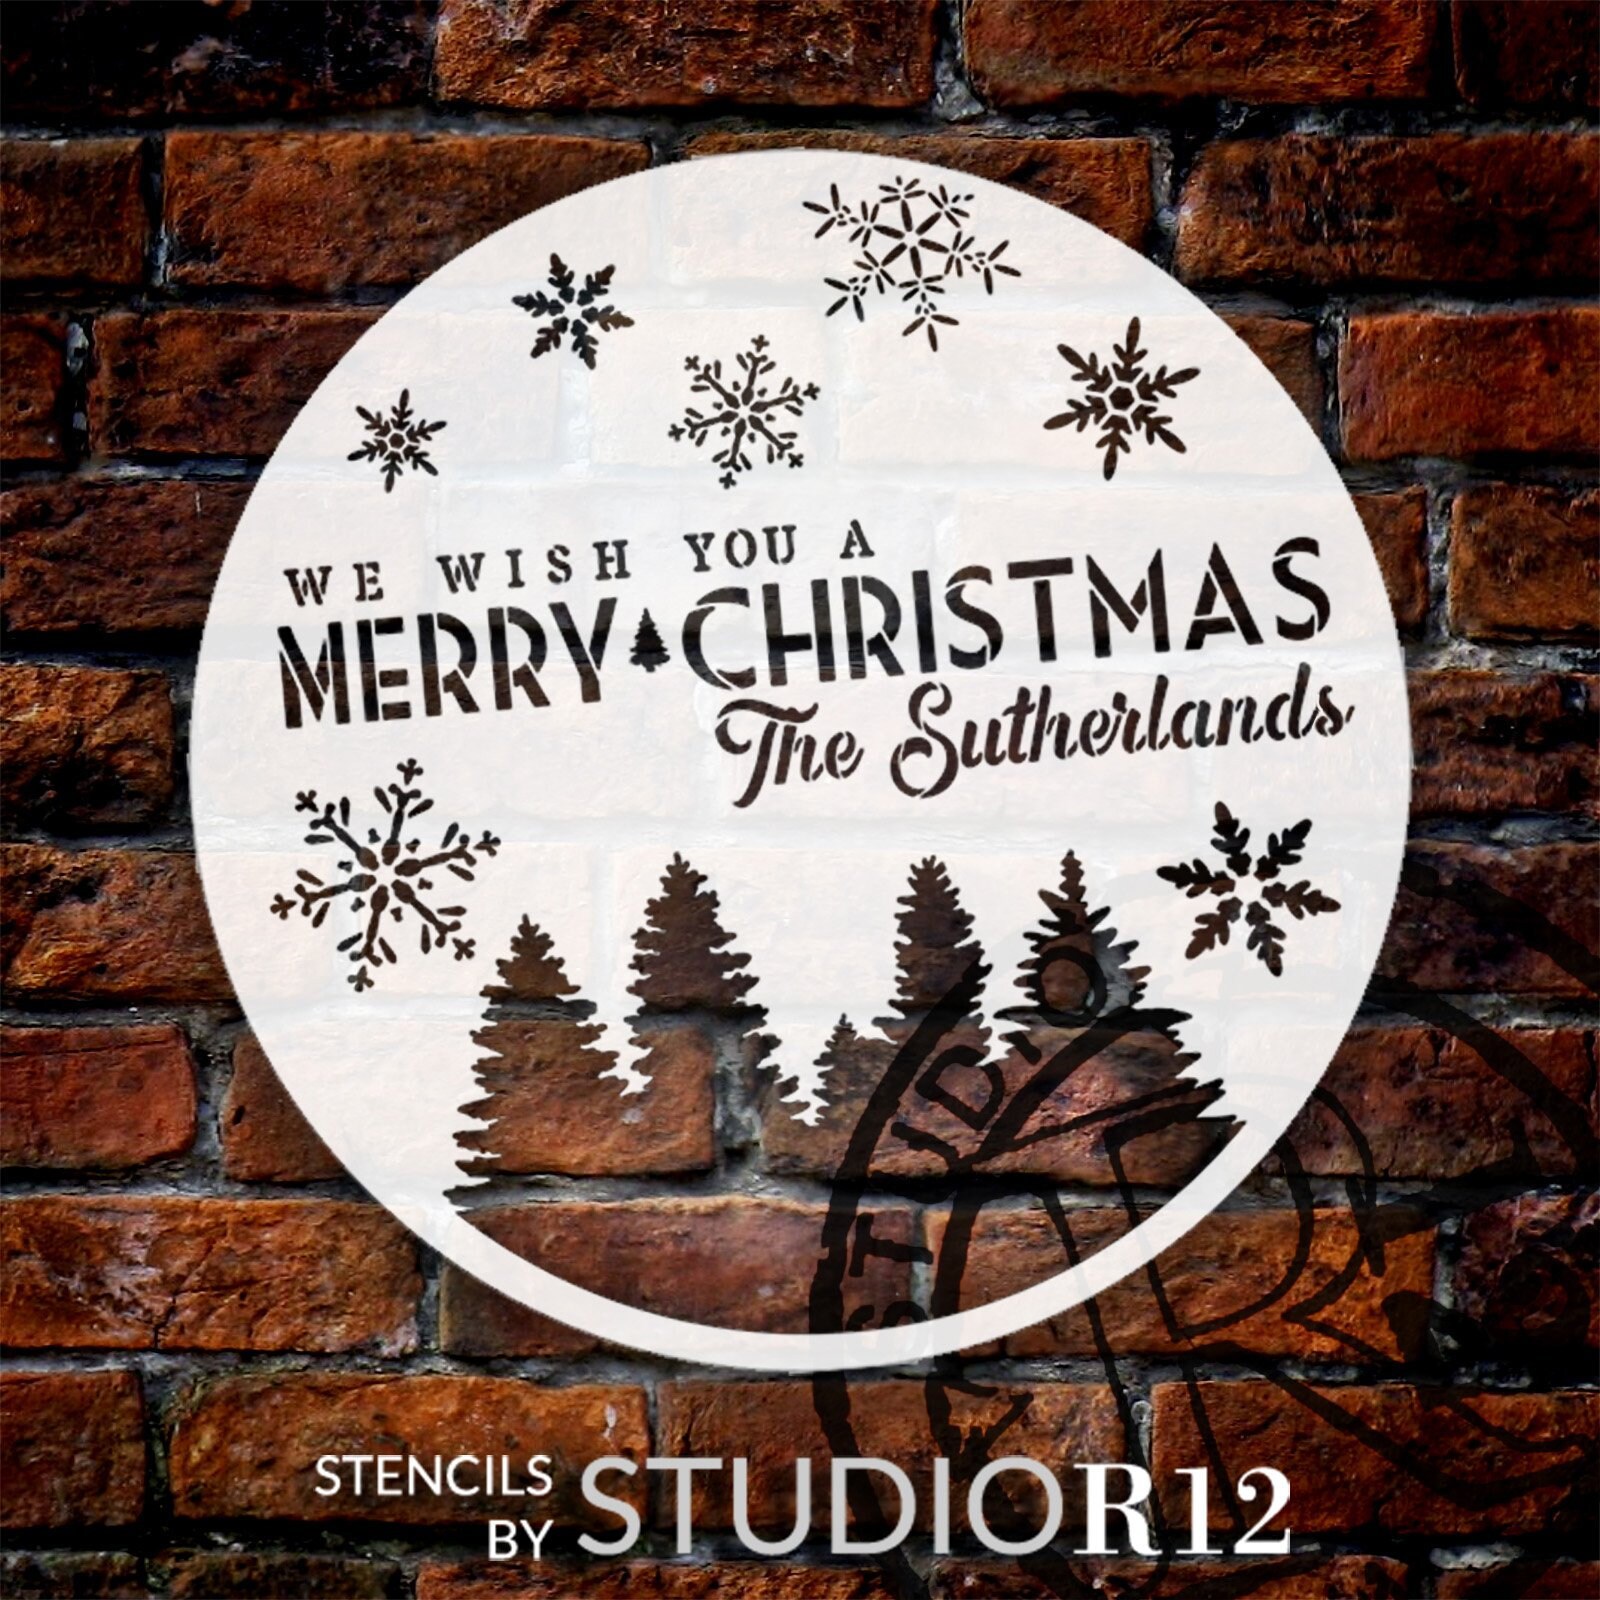 STUDIOR12 STUDIO R12 crafty serif lettering stencils by studior12